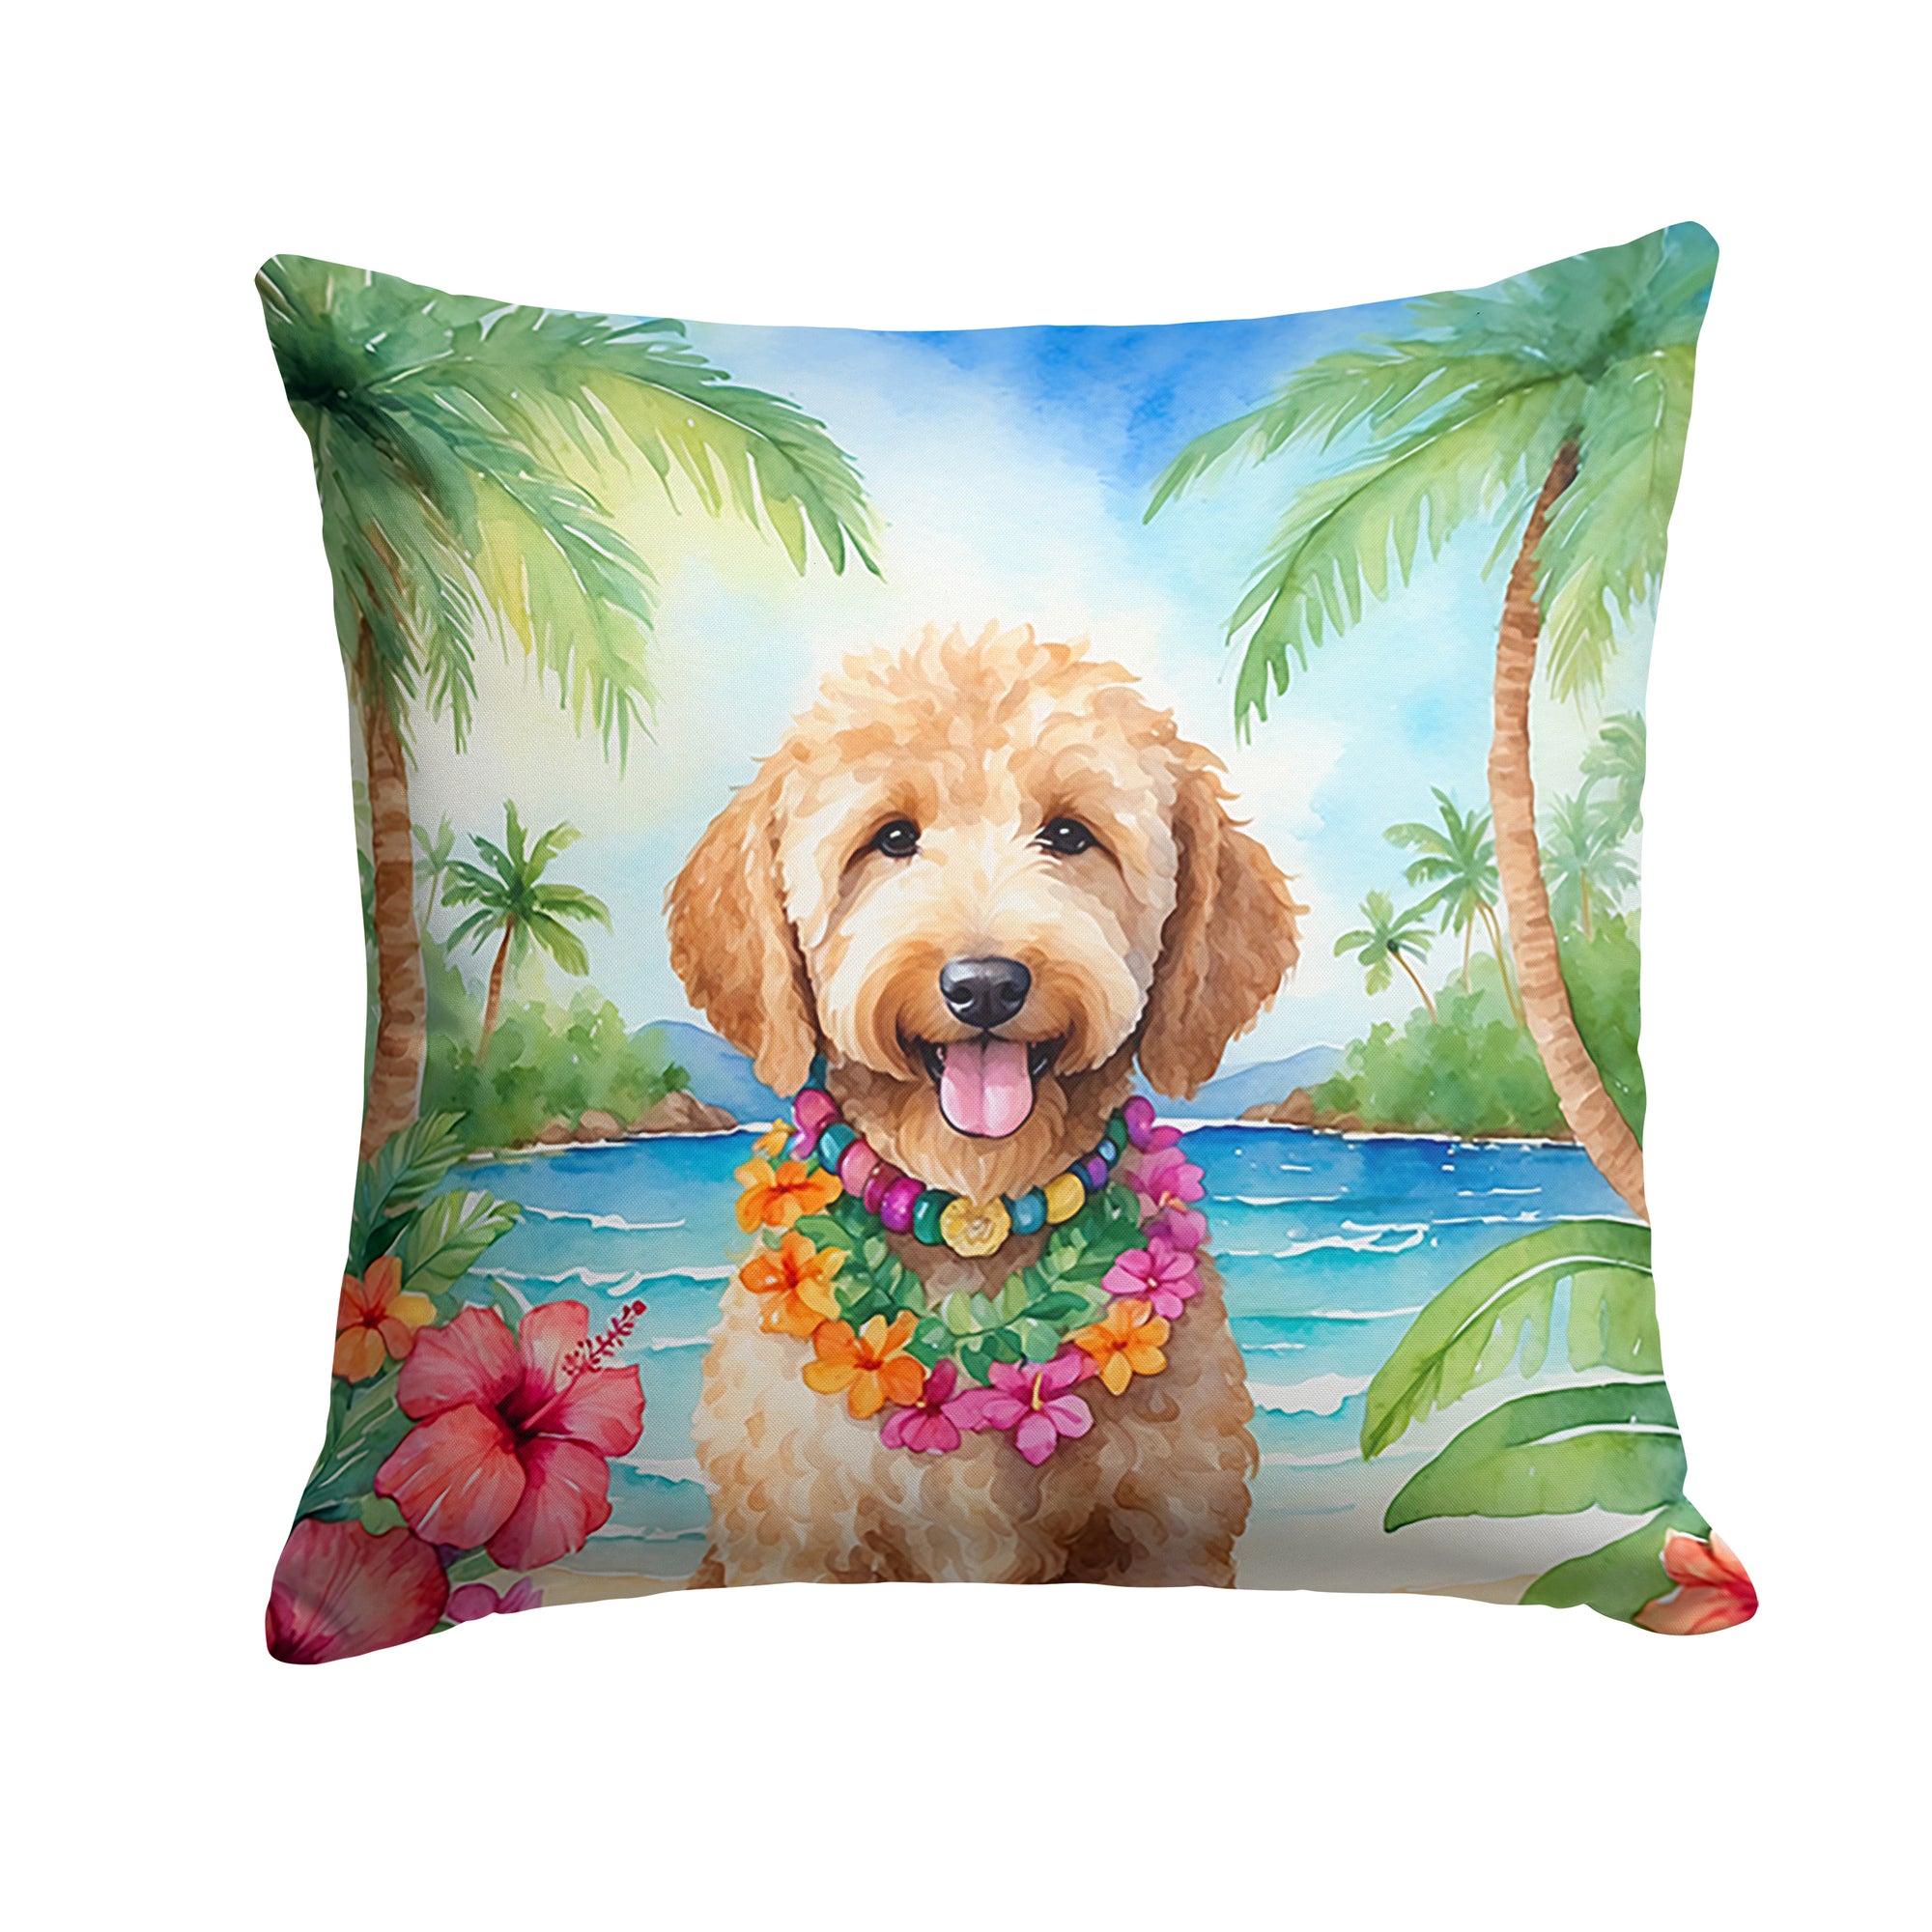 Buy this Goldendoodle Luau Throw Pillow